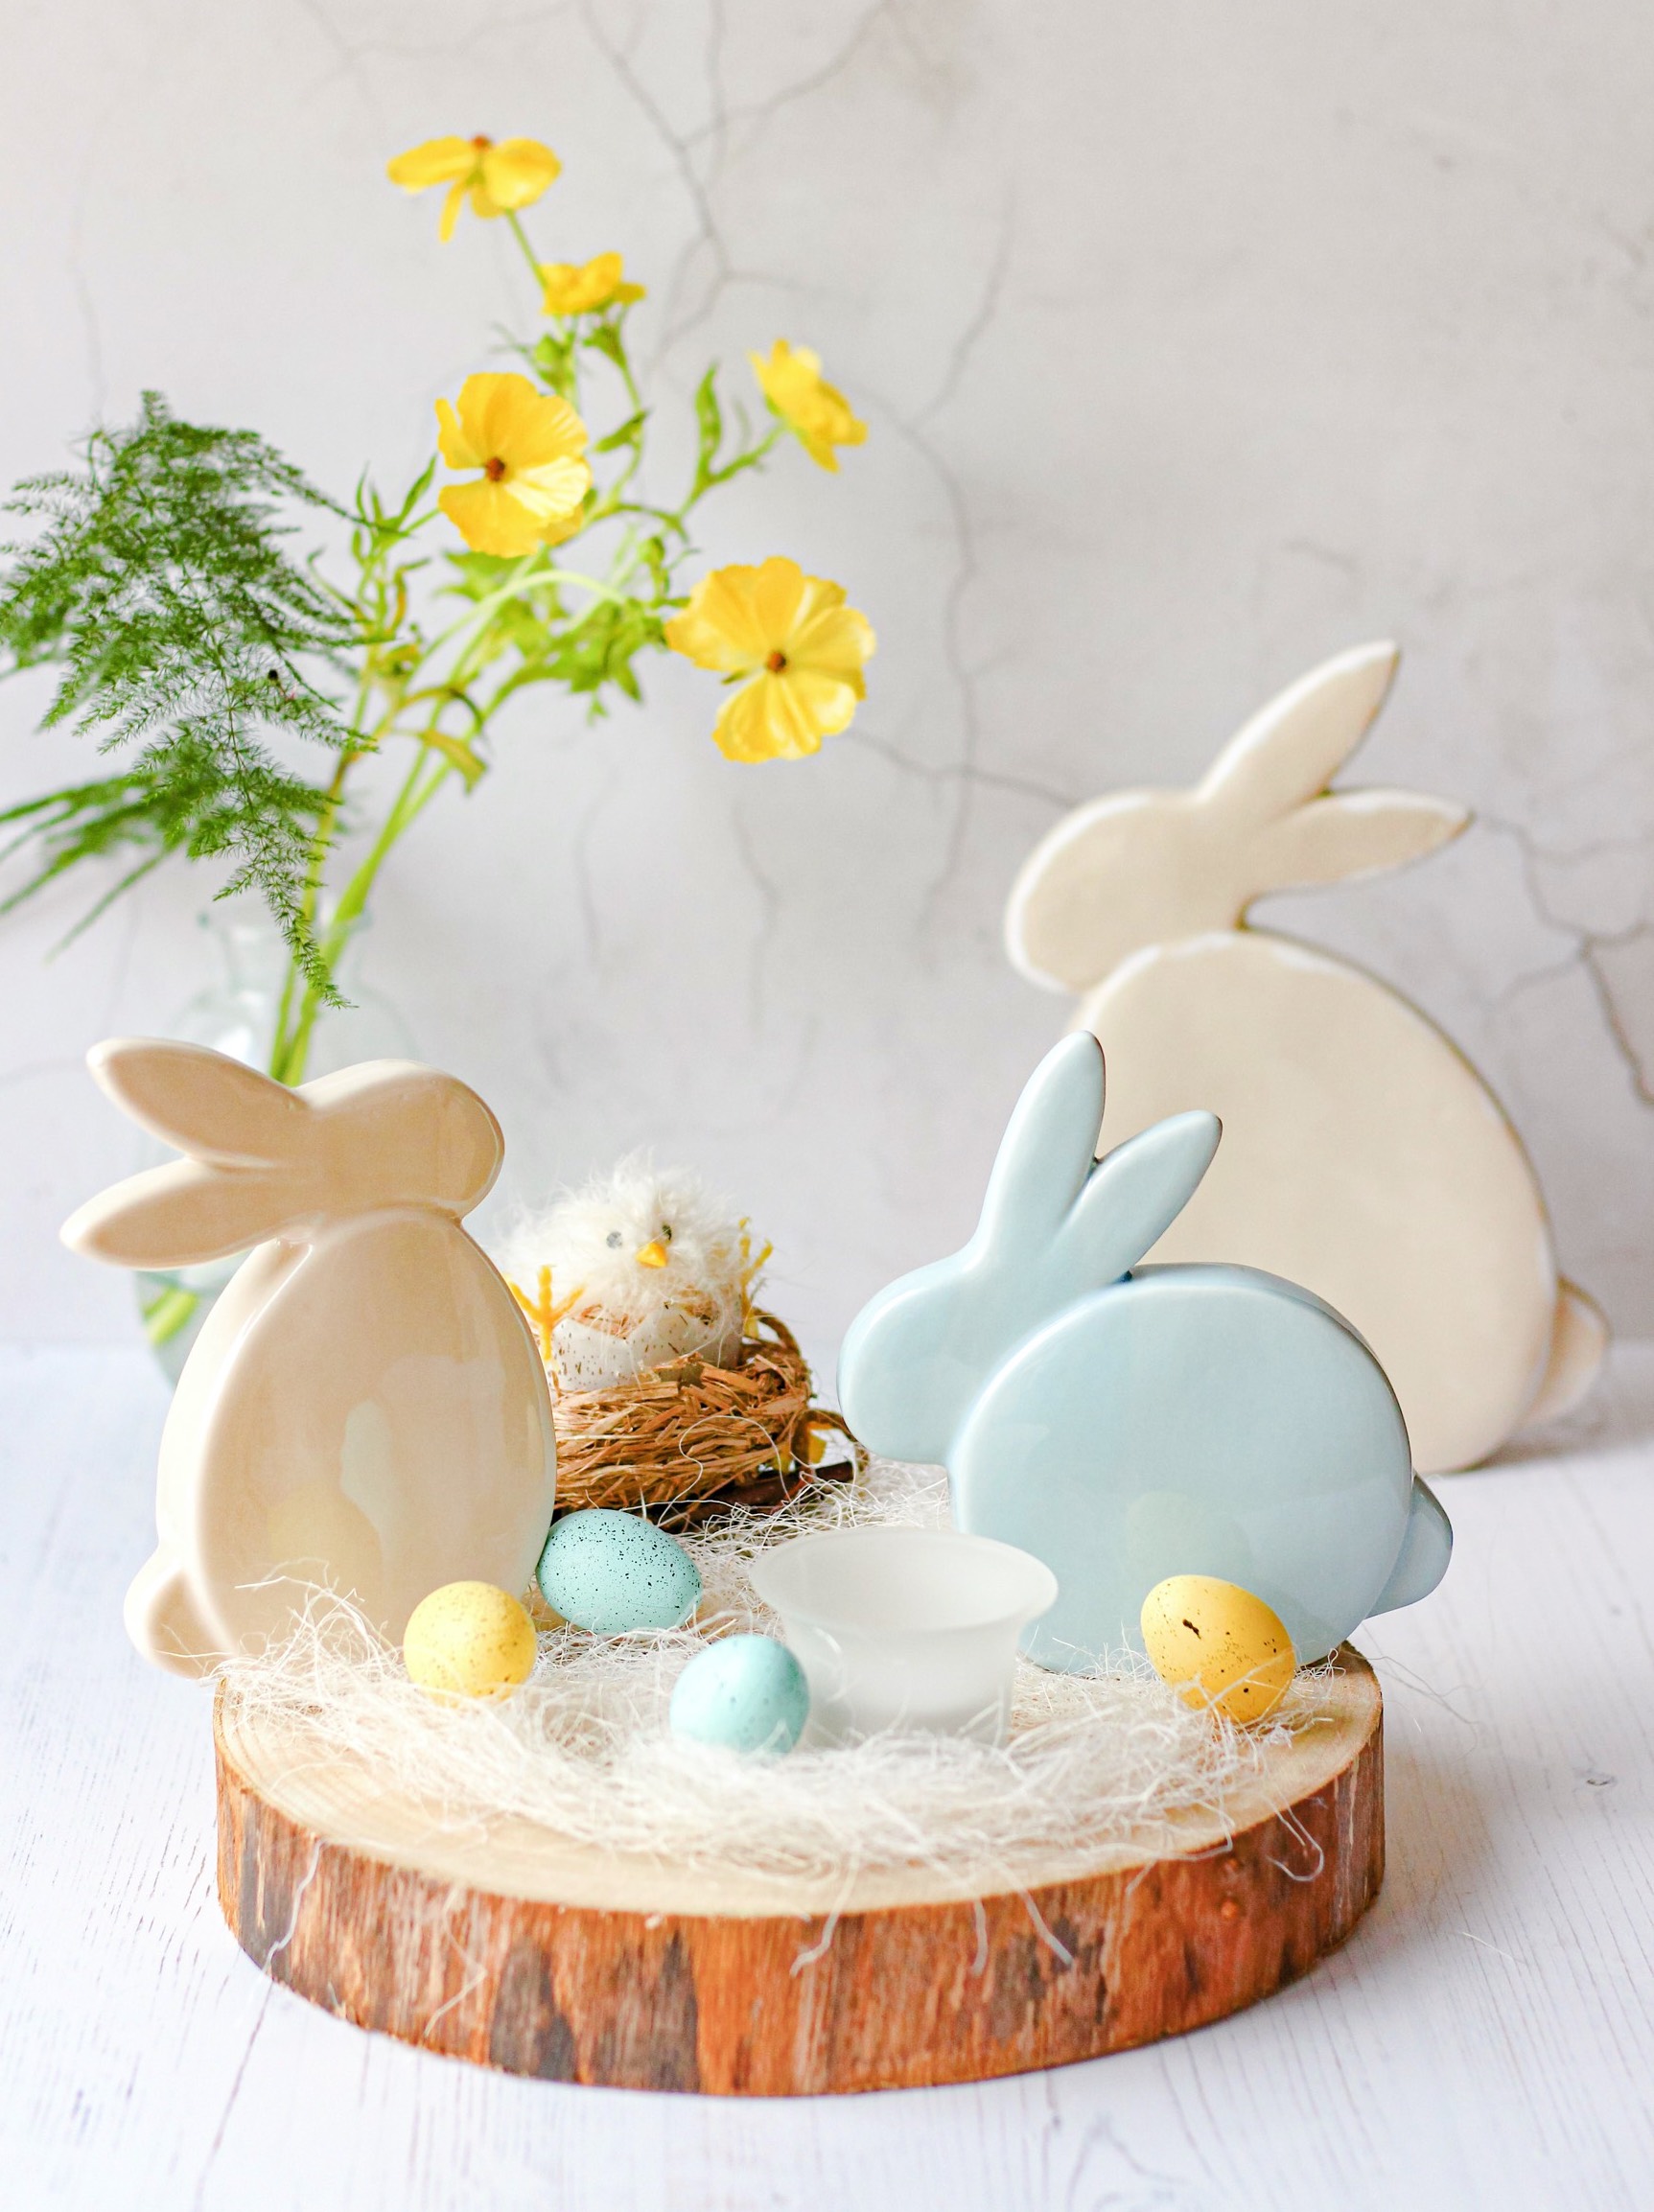 ego woensdag Faial paasdecoratie-blauw-beige konijn - Binkies